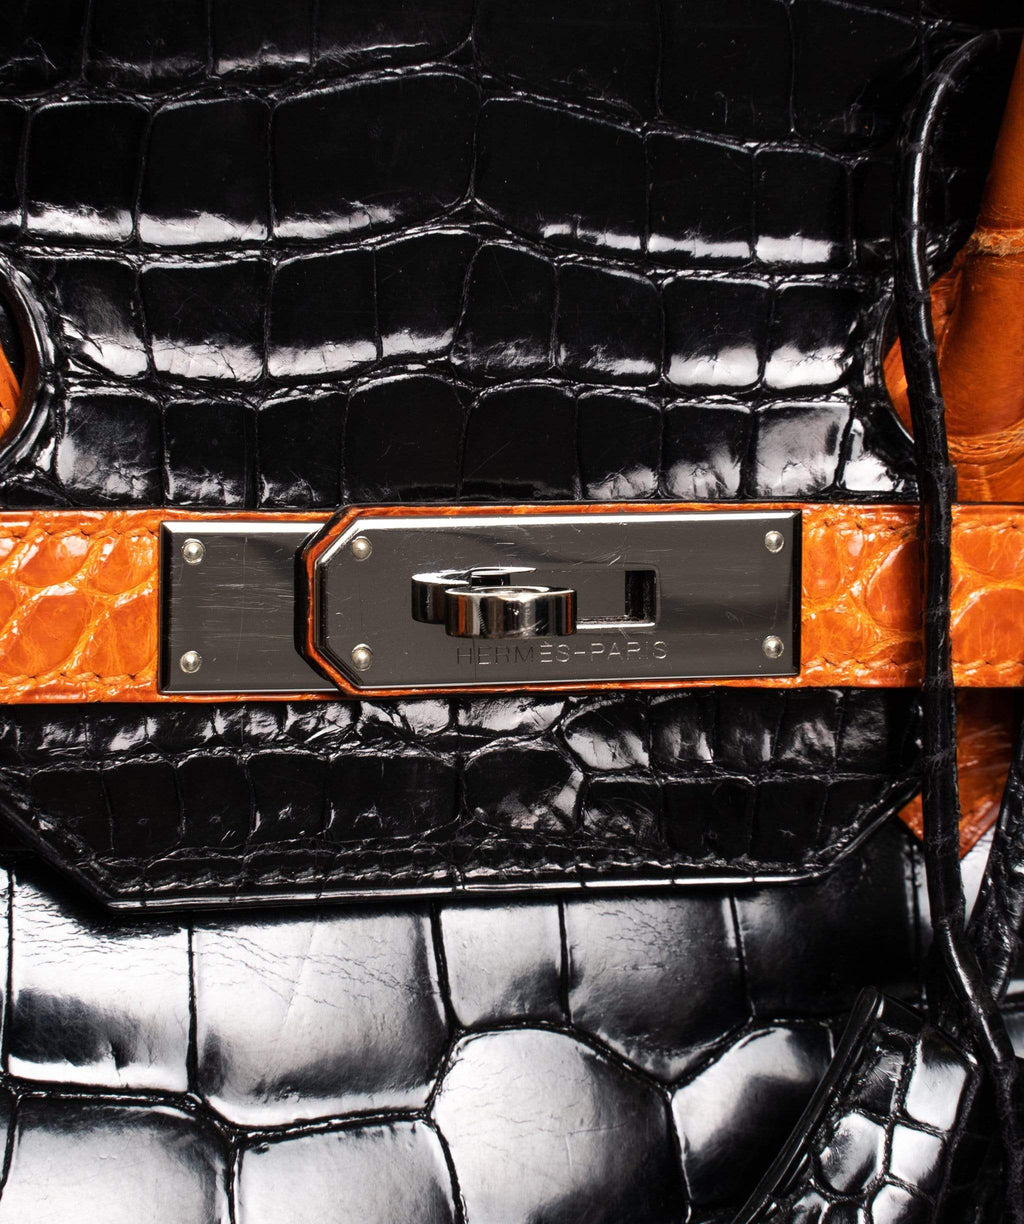 Hermès Birkin 35 Black Porosus Crocodile Bag GHW